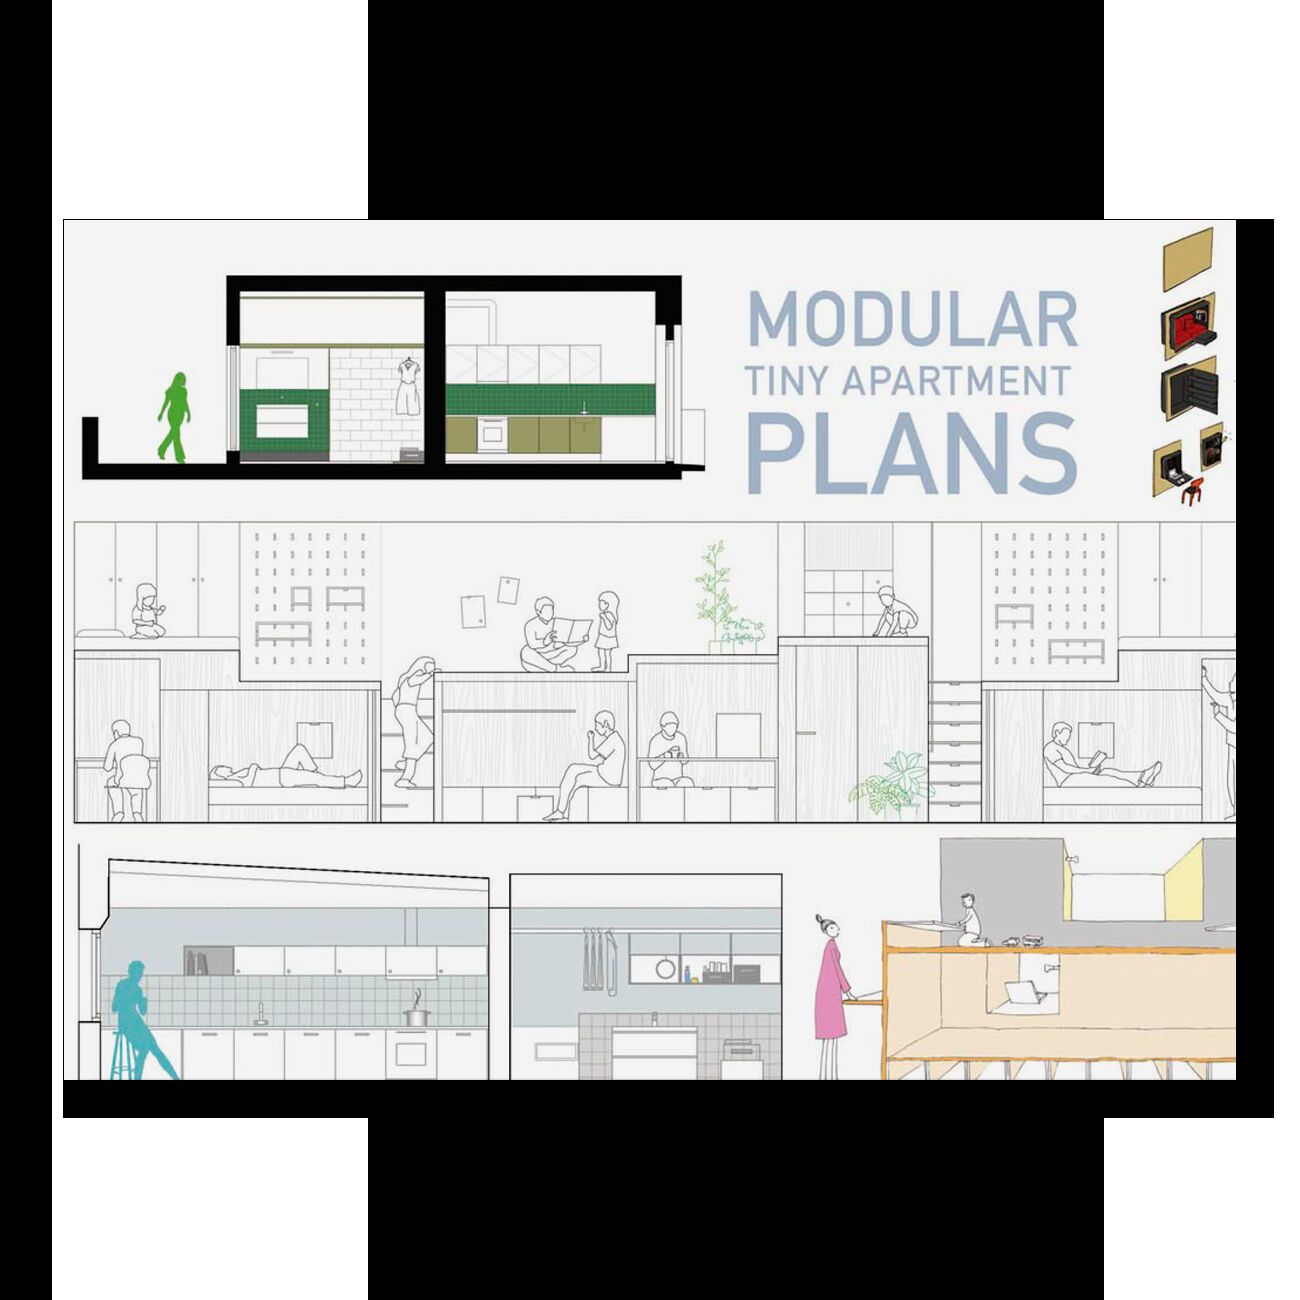 Modular Tiny Apartments Plans